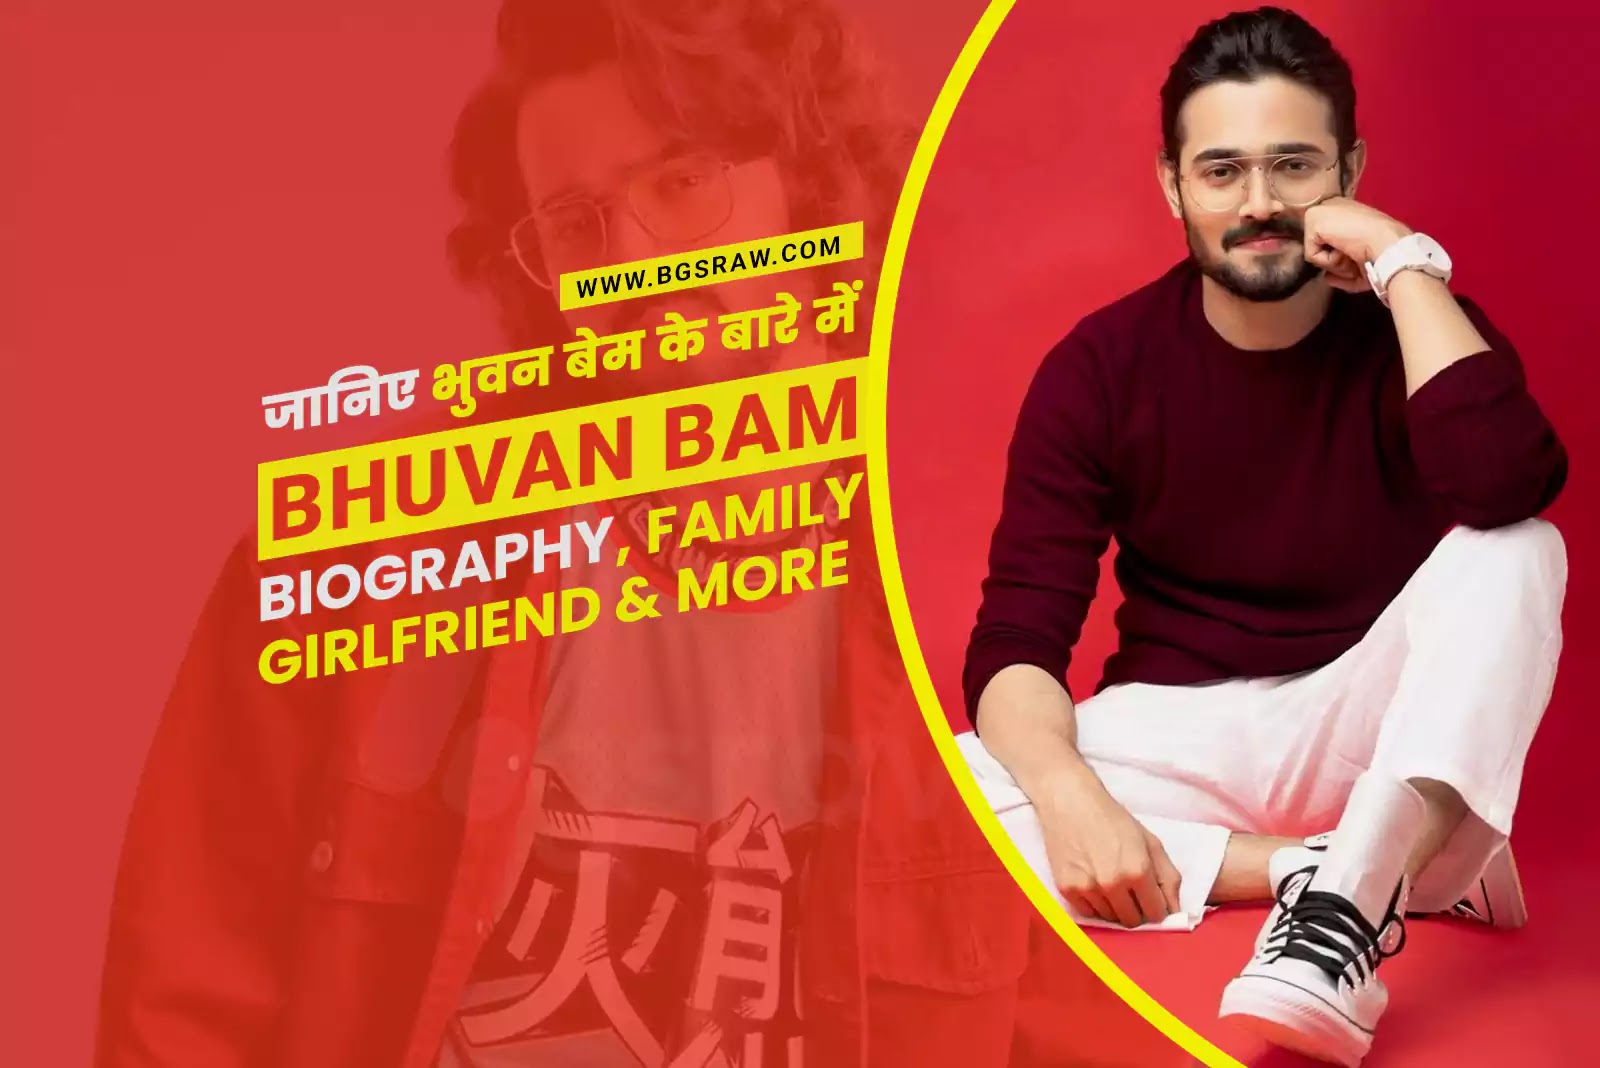 Bhuvan Bam Biography, BB Ki Vines, Girlfriend, Net worth, Family, Awards